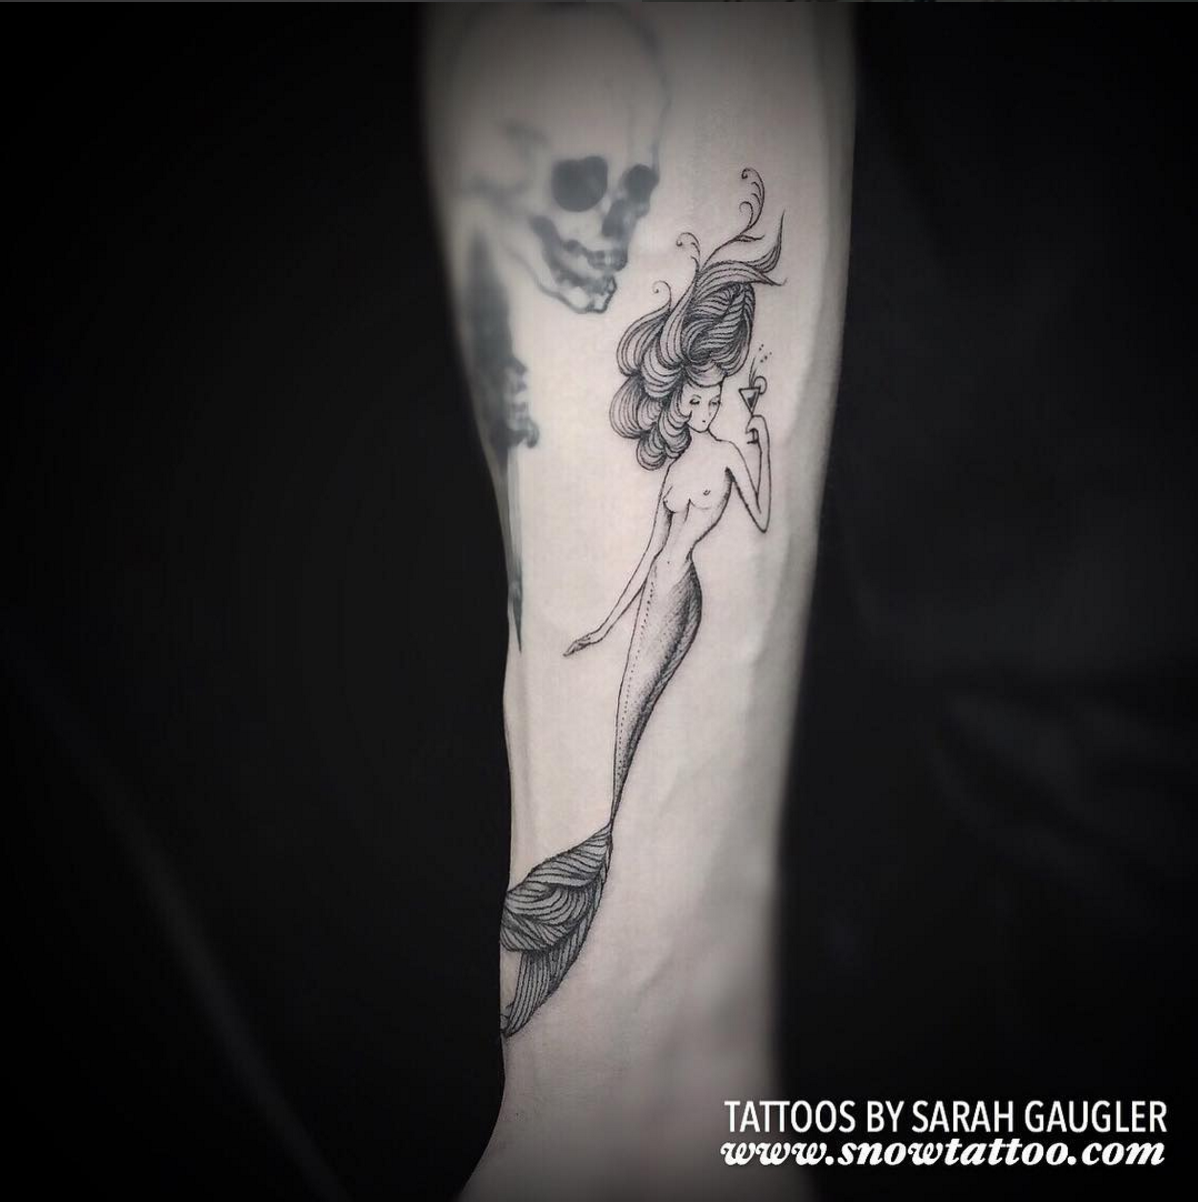 Sarah Gaugler Snow Tattoo Custom Signature Mermaid Original Design Intricate Detailed Elegant Fine Line Finelinetattoo New York Best Tattoos Best Tattoo Artist NYC SarahGauglerMermaid.png